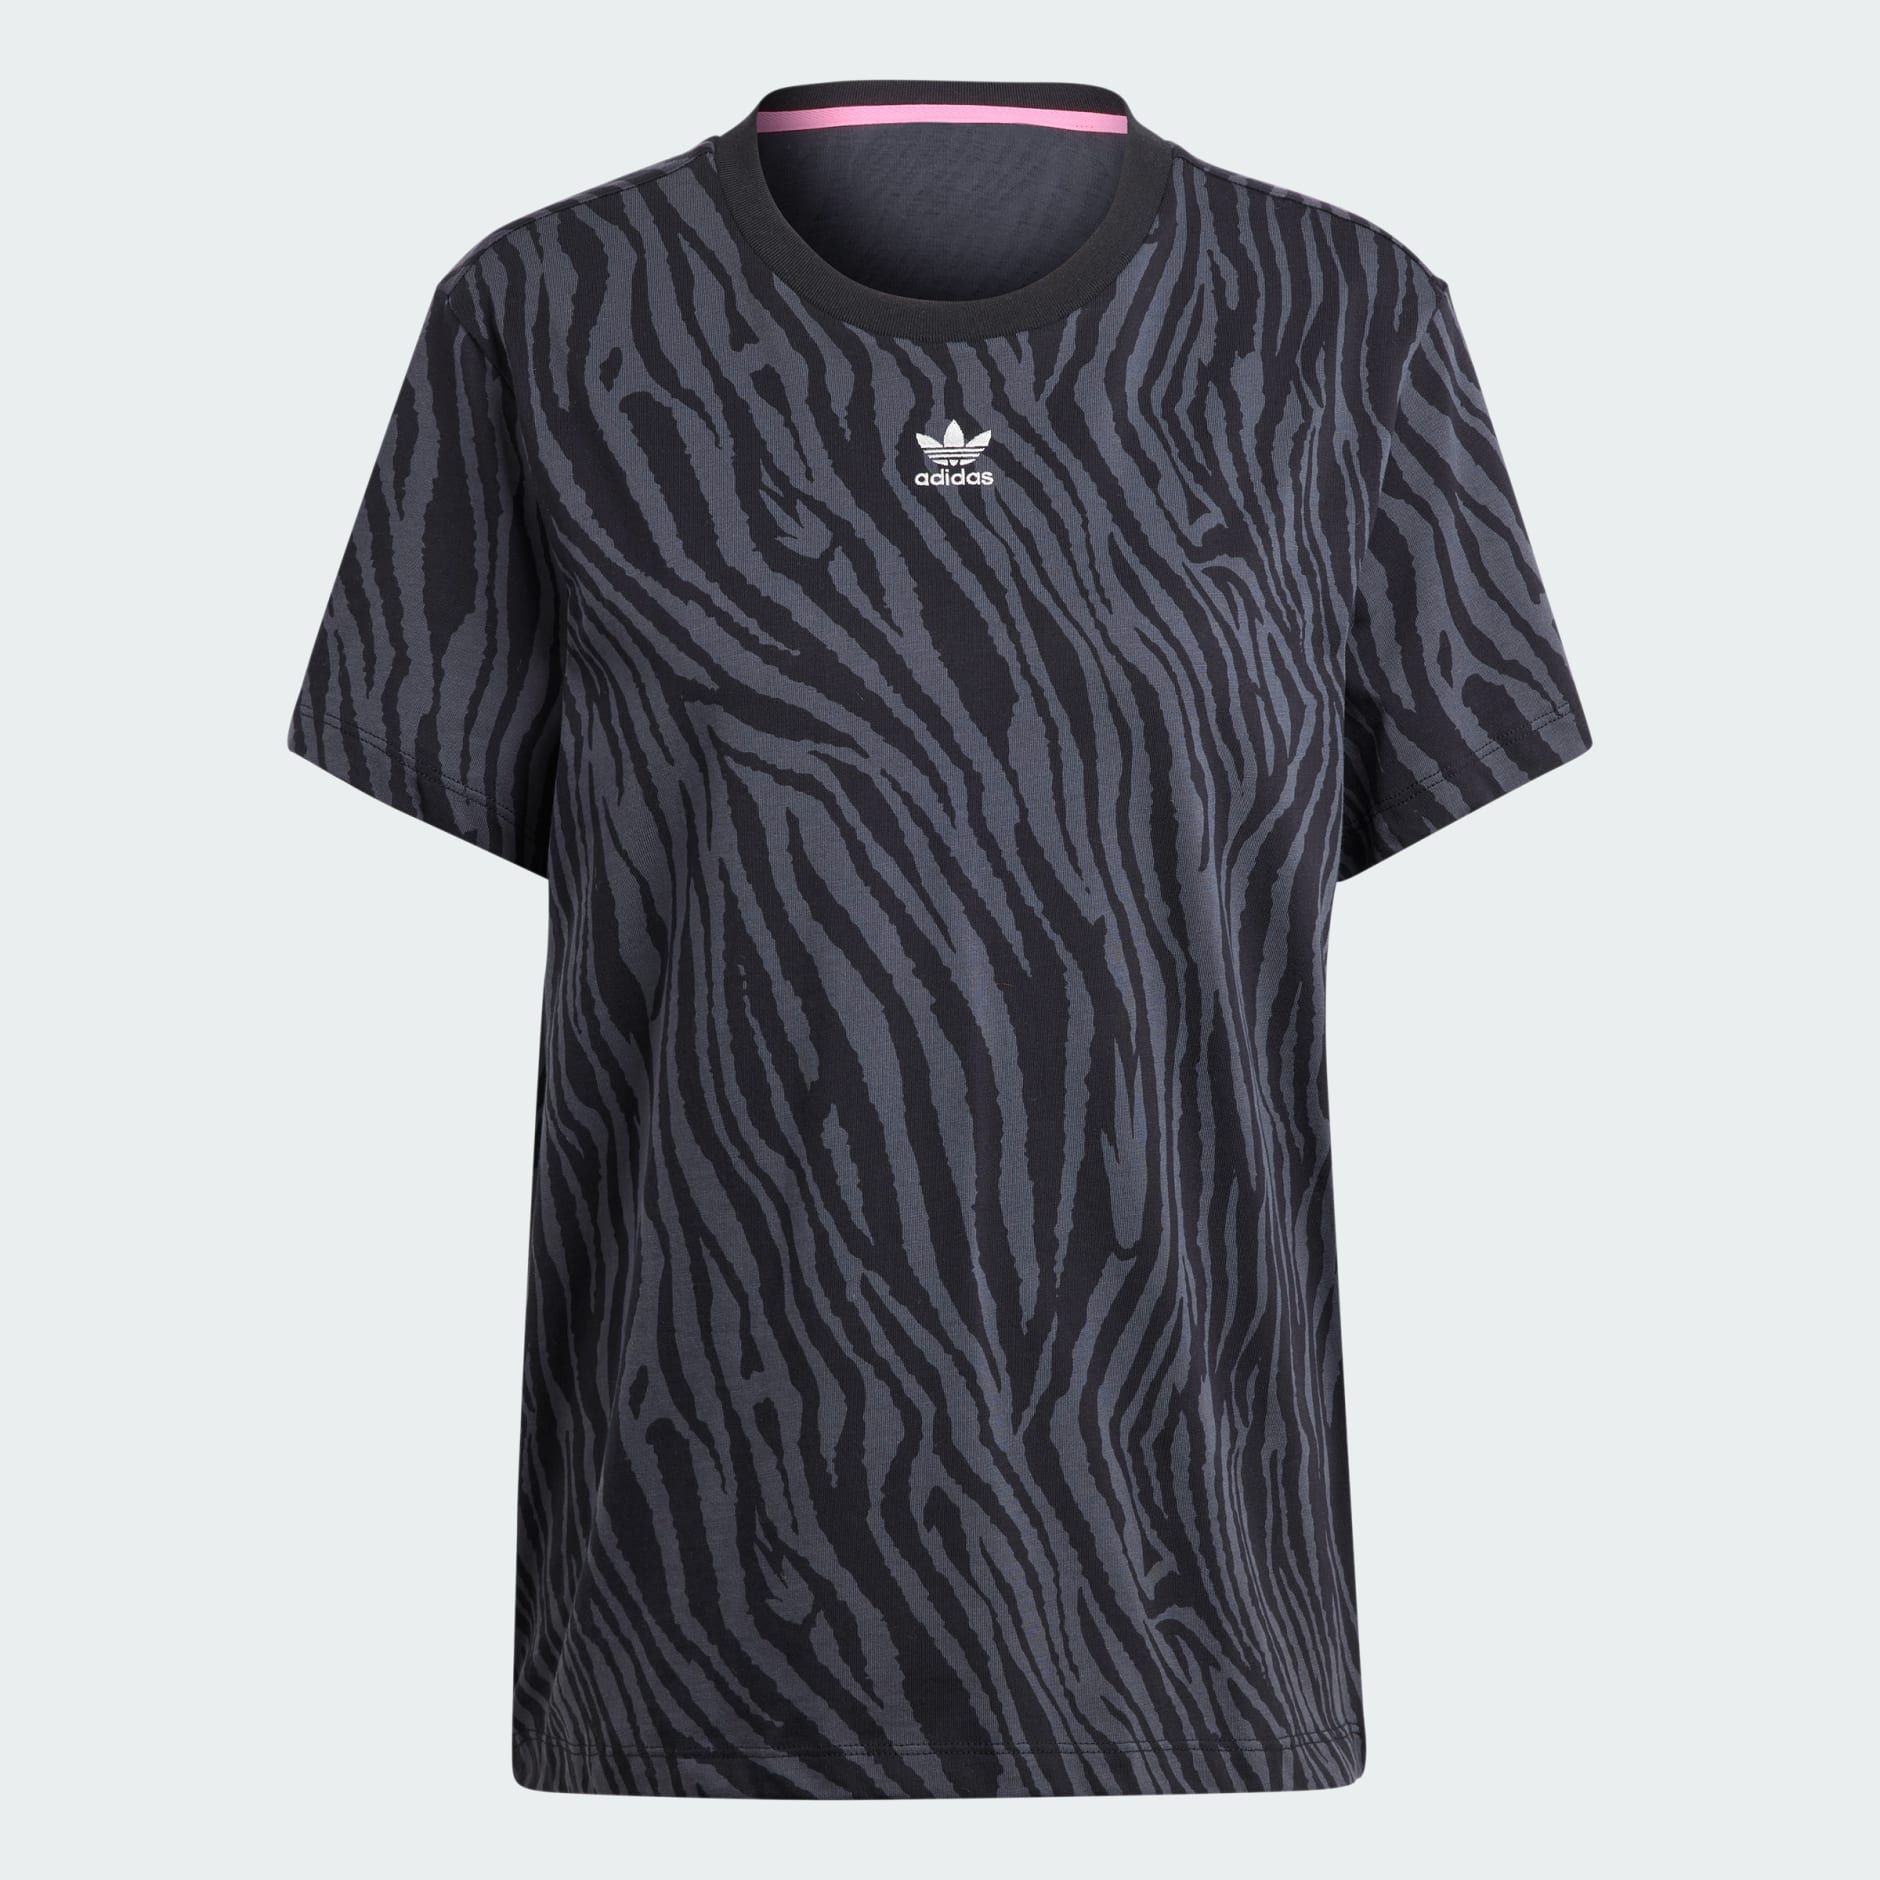 adidas Allover Zebra Animal Print Essentials Joggers - Grey